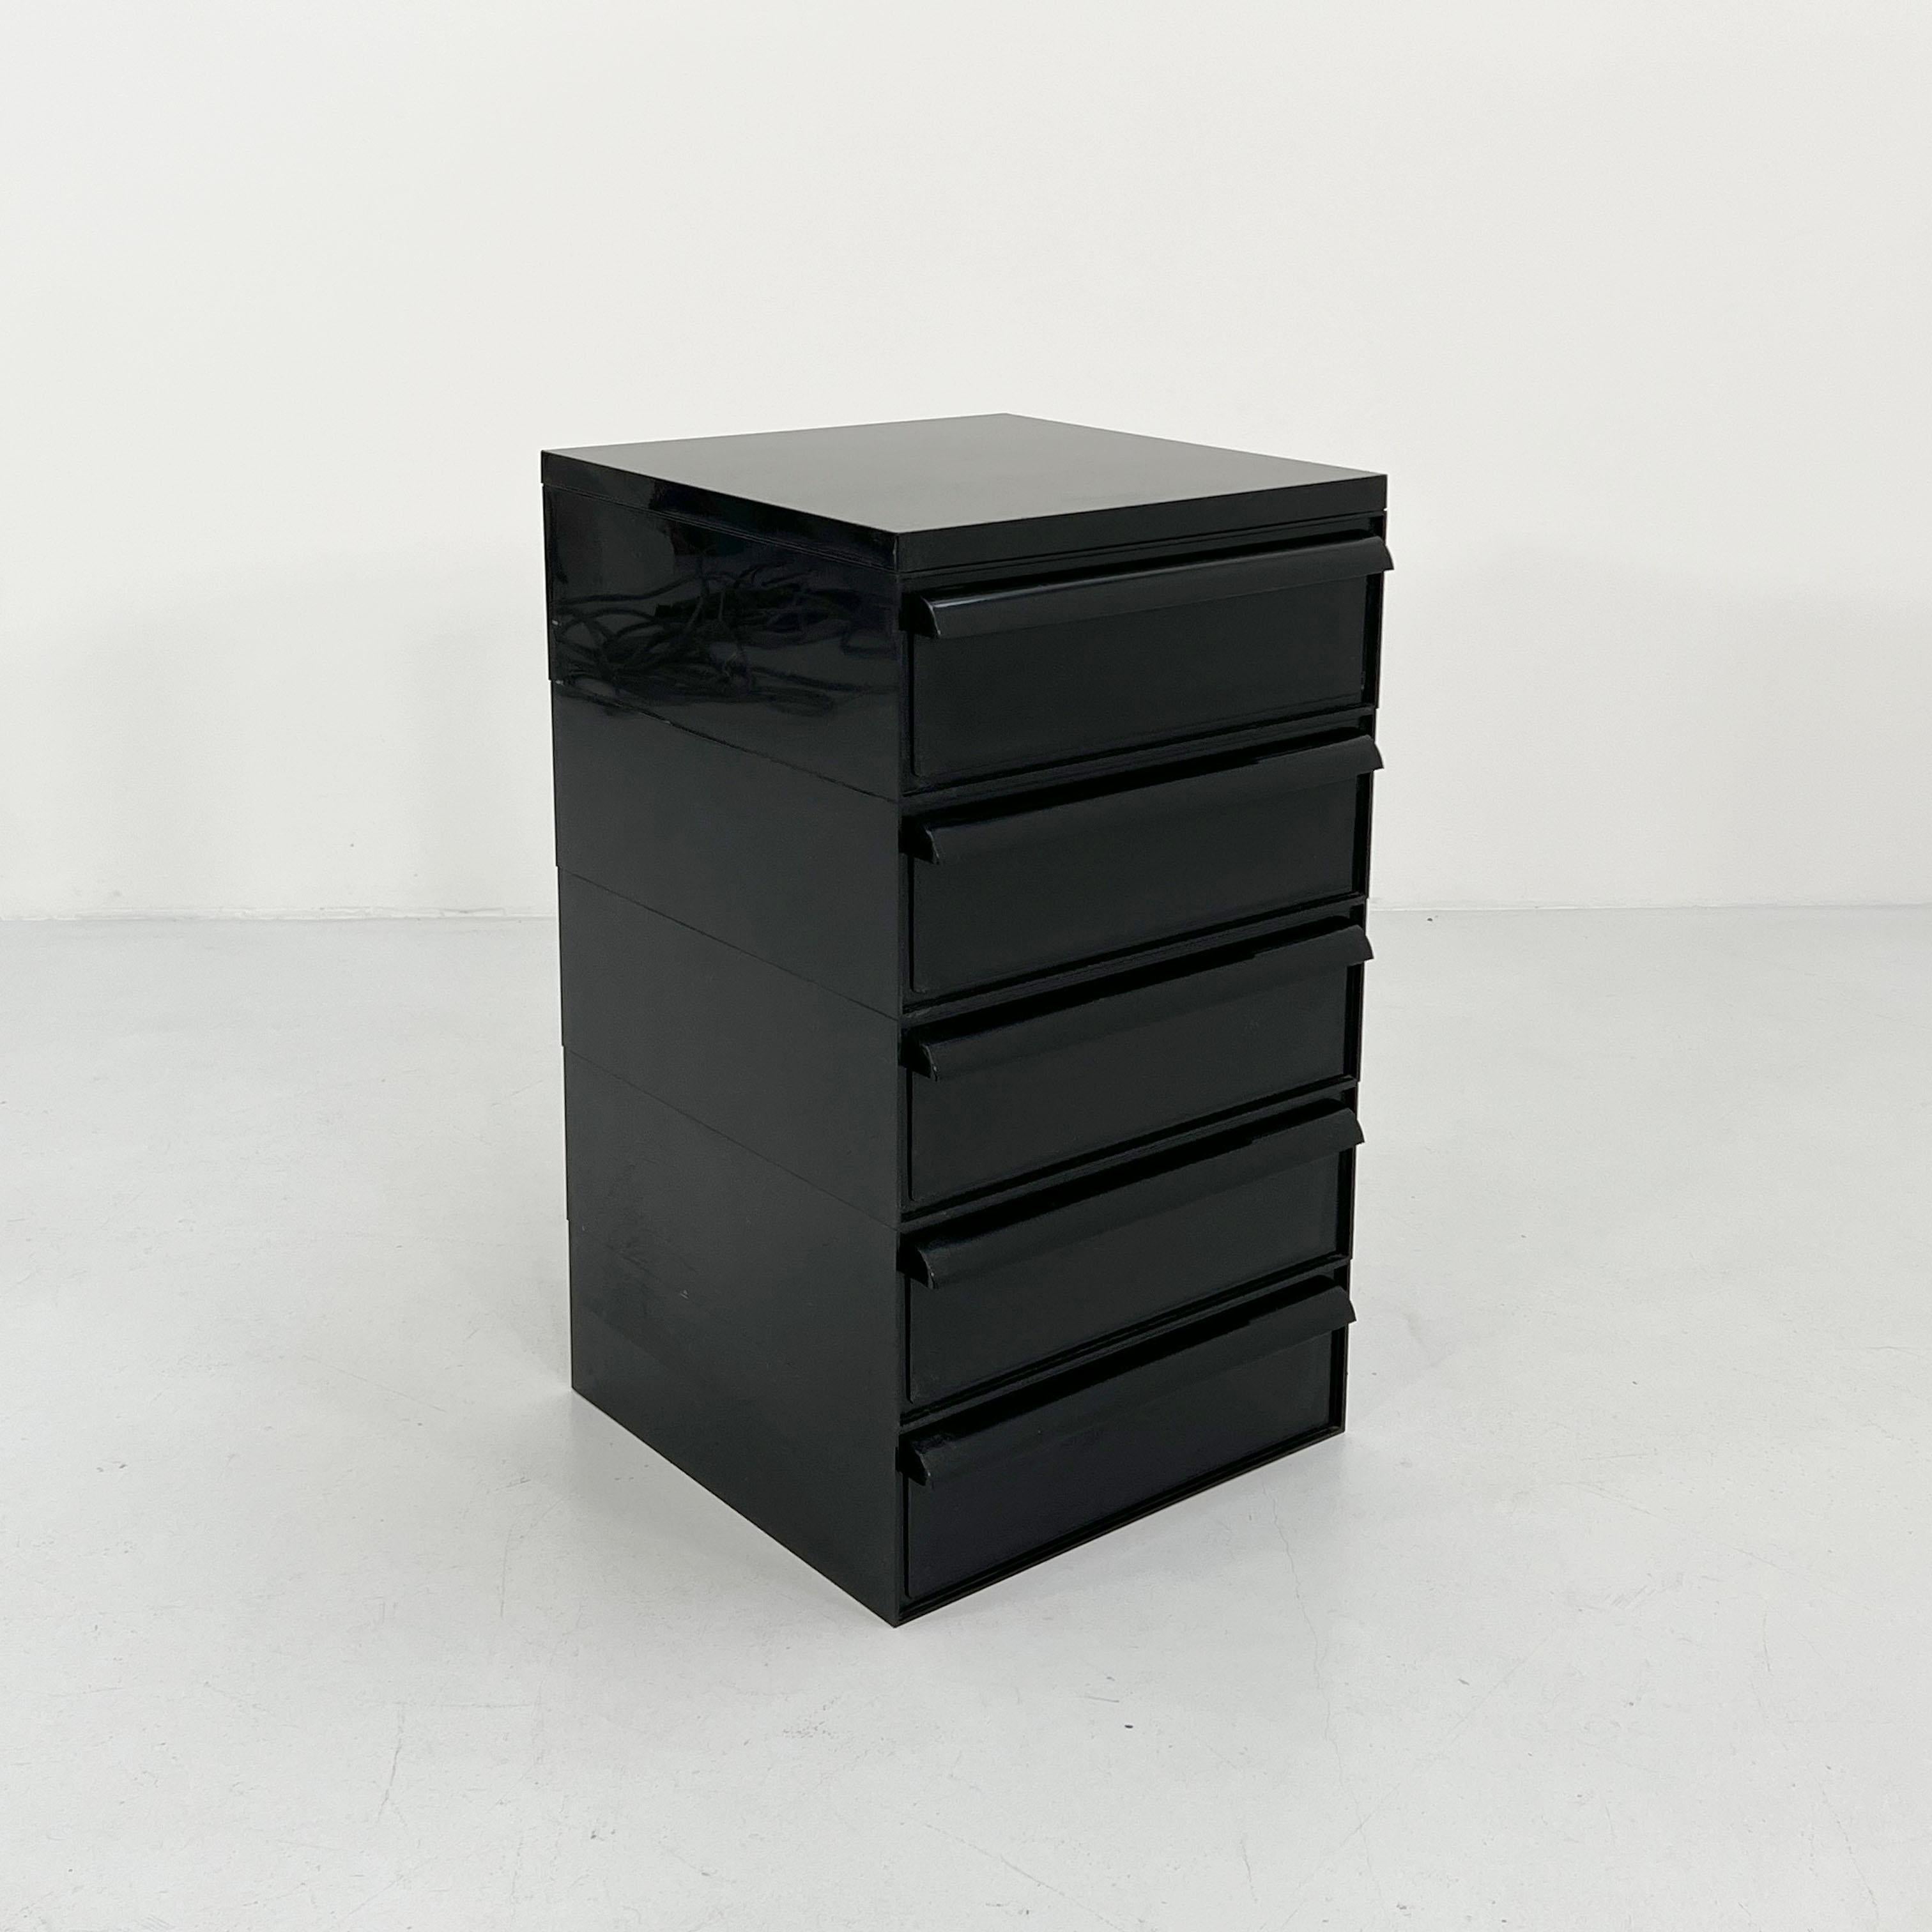 Plastic Black Chest of Drawers Model “4601” by Simon Fussell for Kartell, 1970s